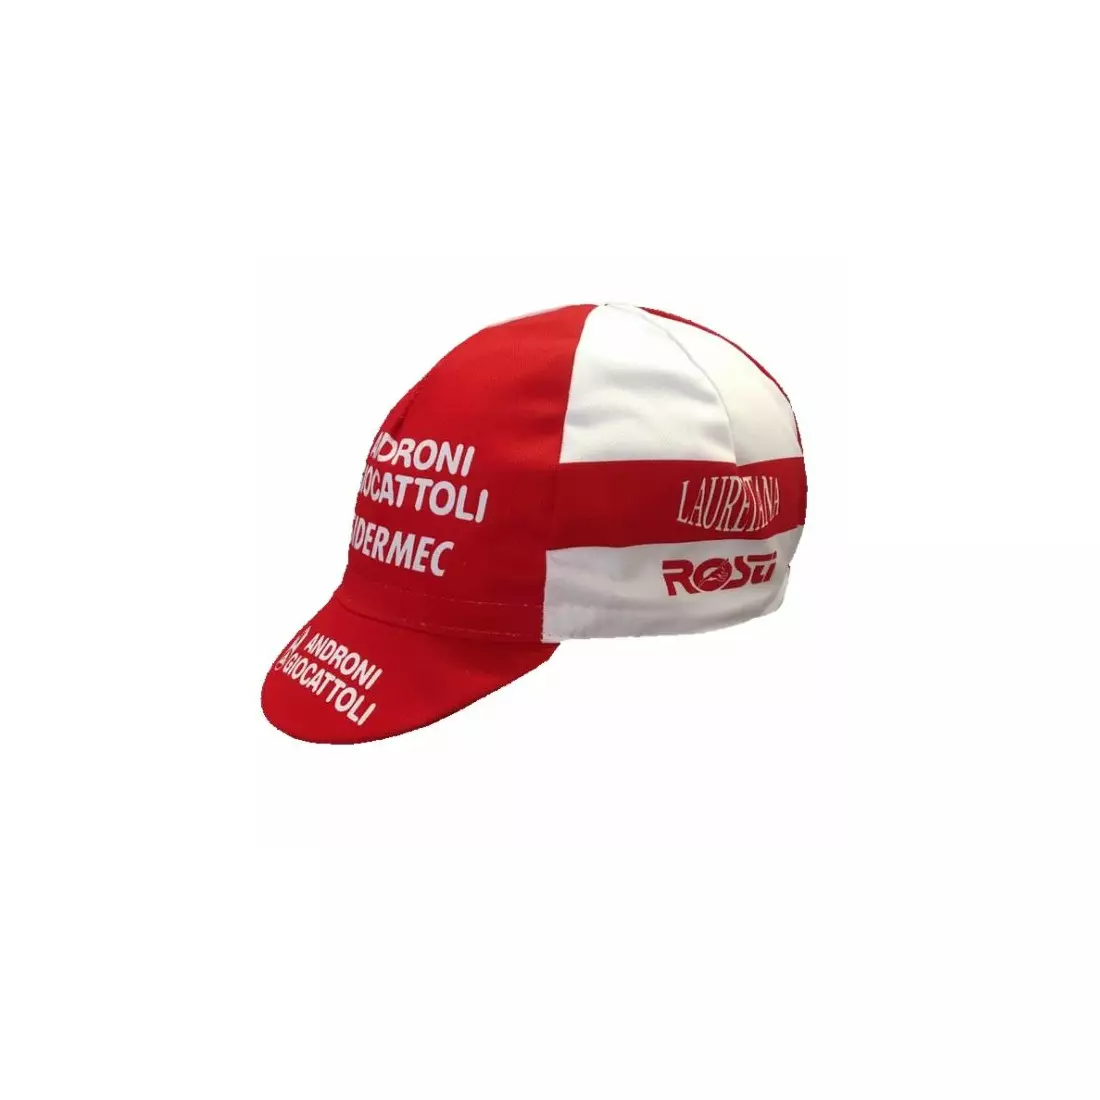 APIS PROFI ANDRONI GIOCATTOLI ROSTI cycling cap with visor